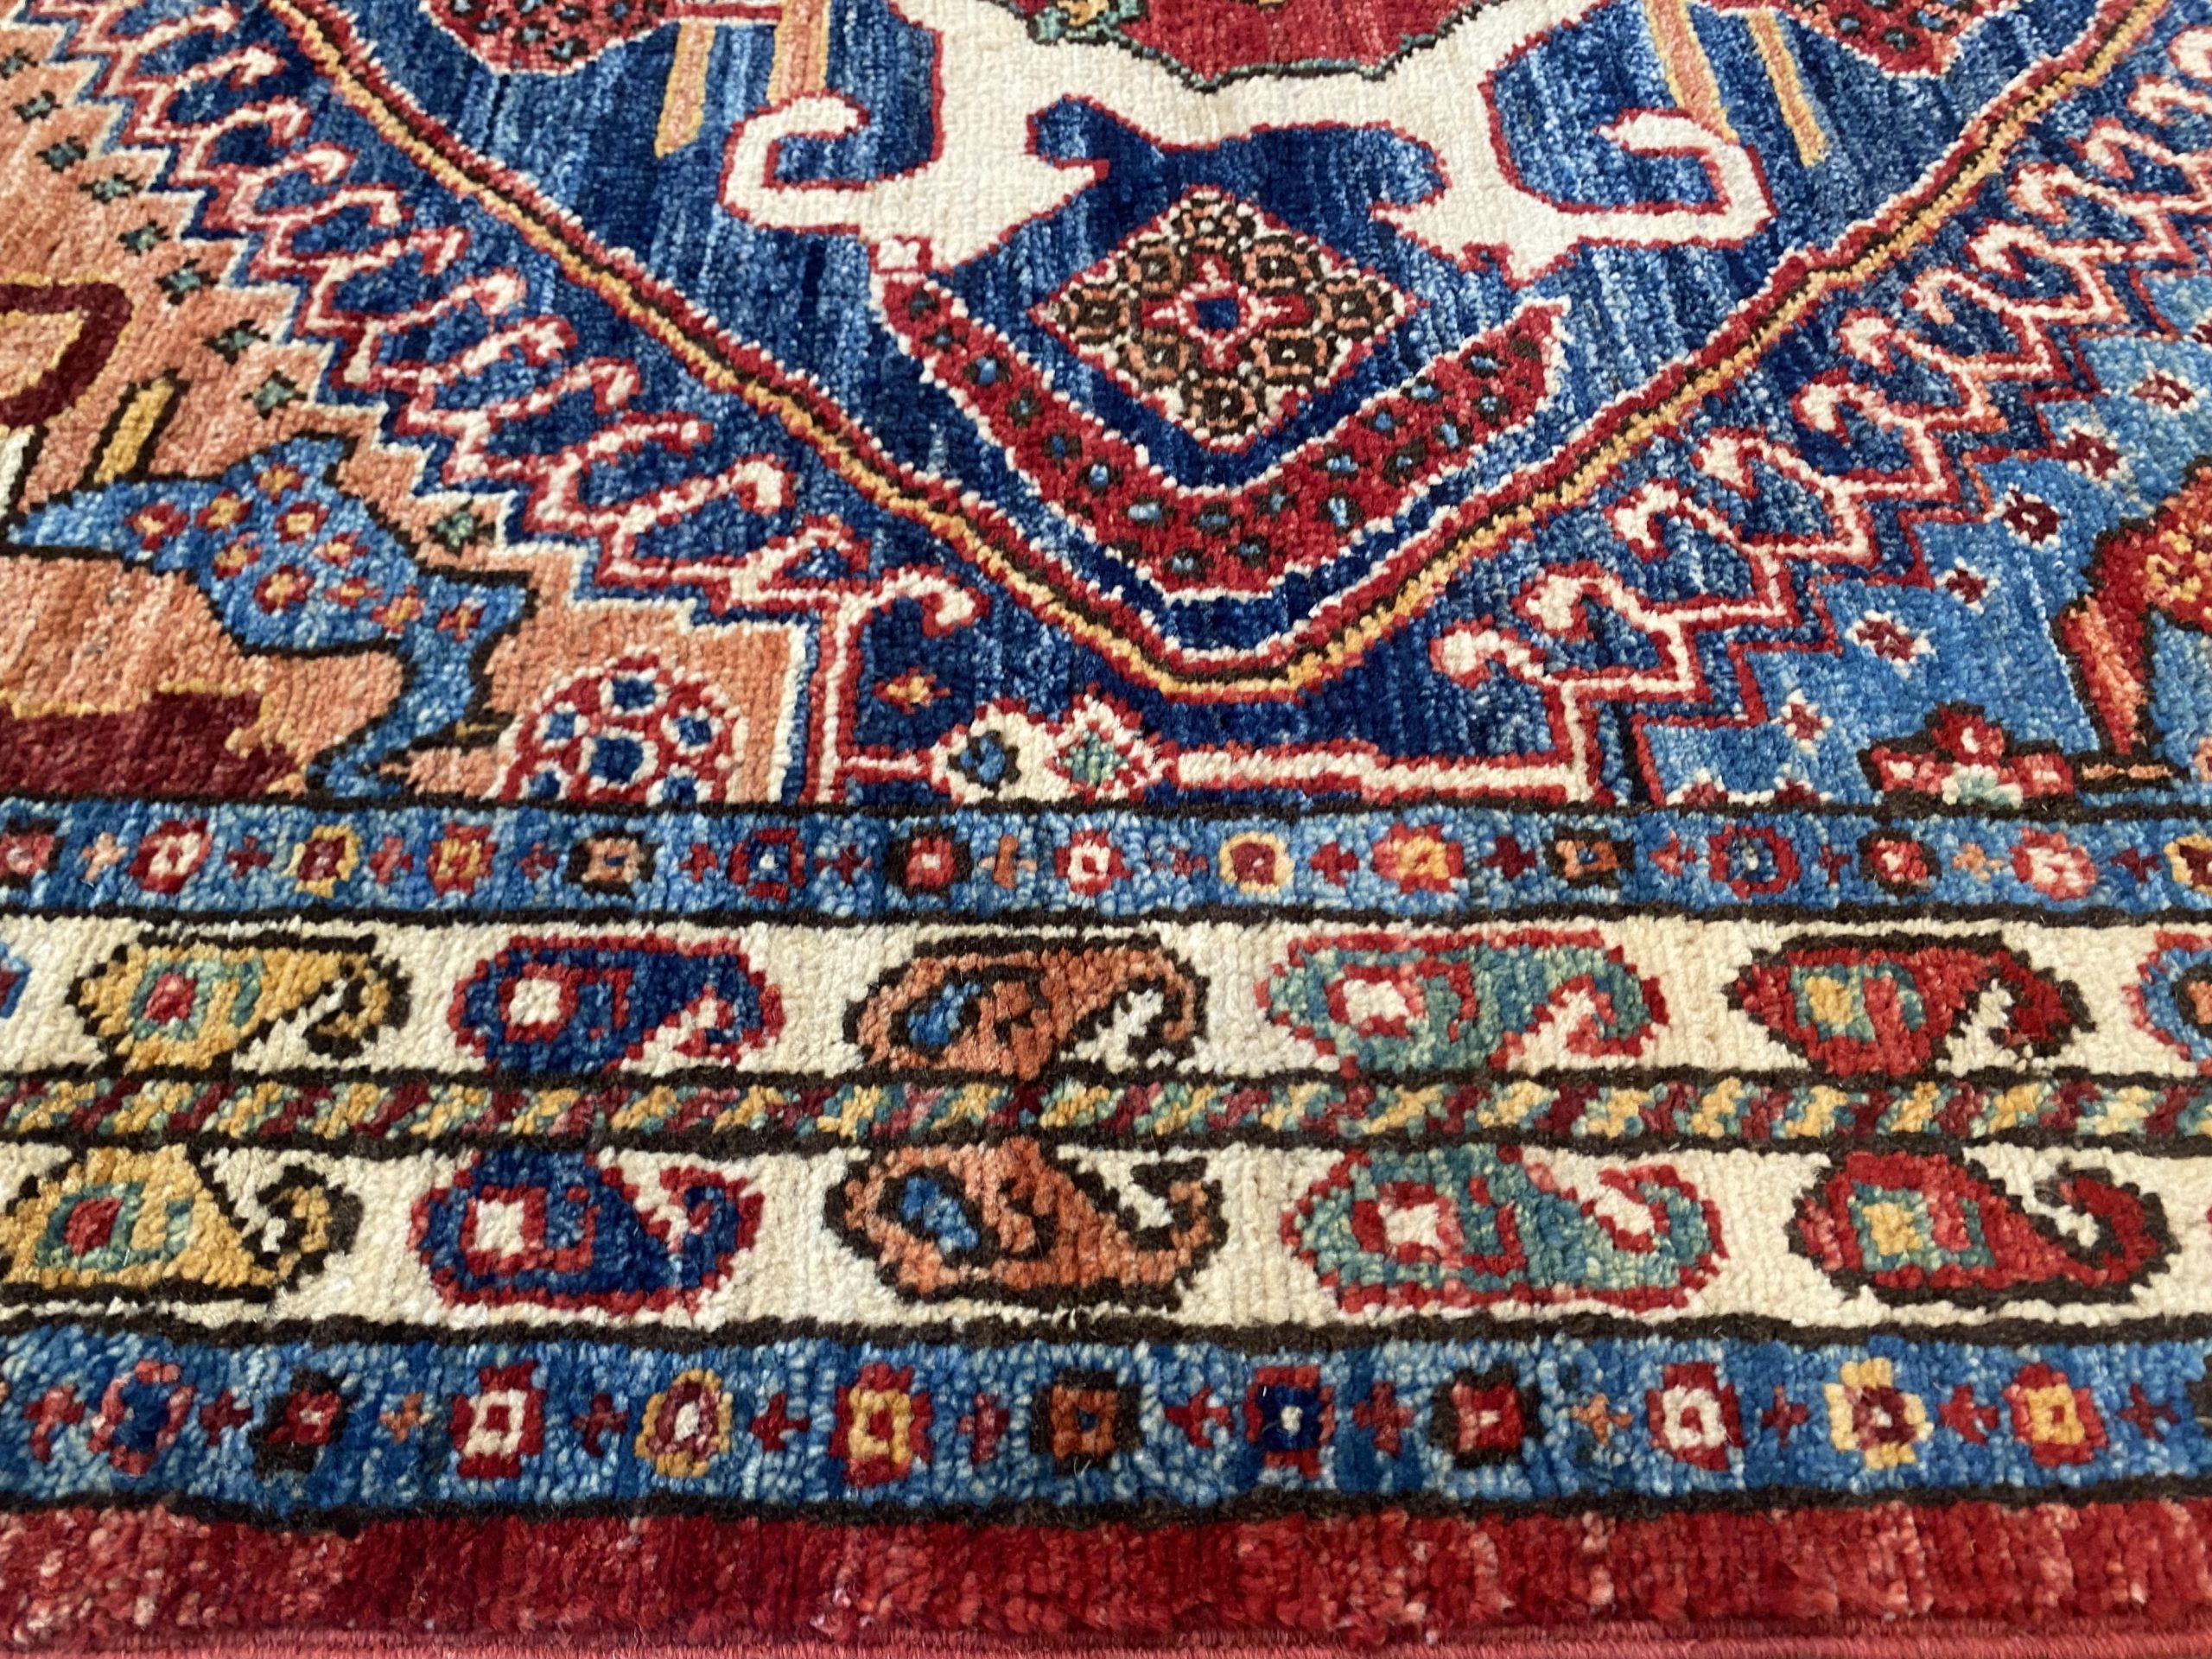 Rug# 26658, Afghan Turkaman weave, 19th century Caucasian design, vegetable dyes, circa 2018, size 146x89cm (1)